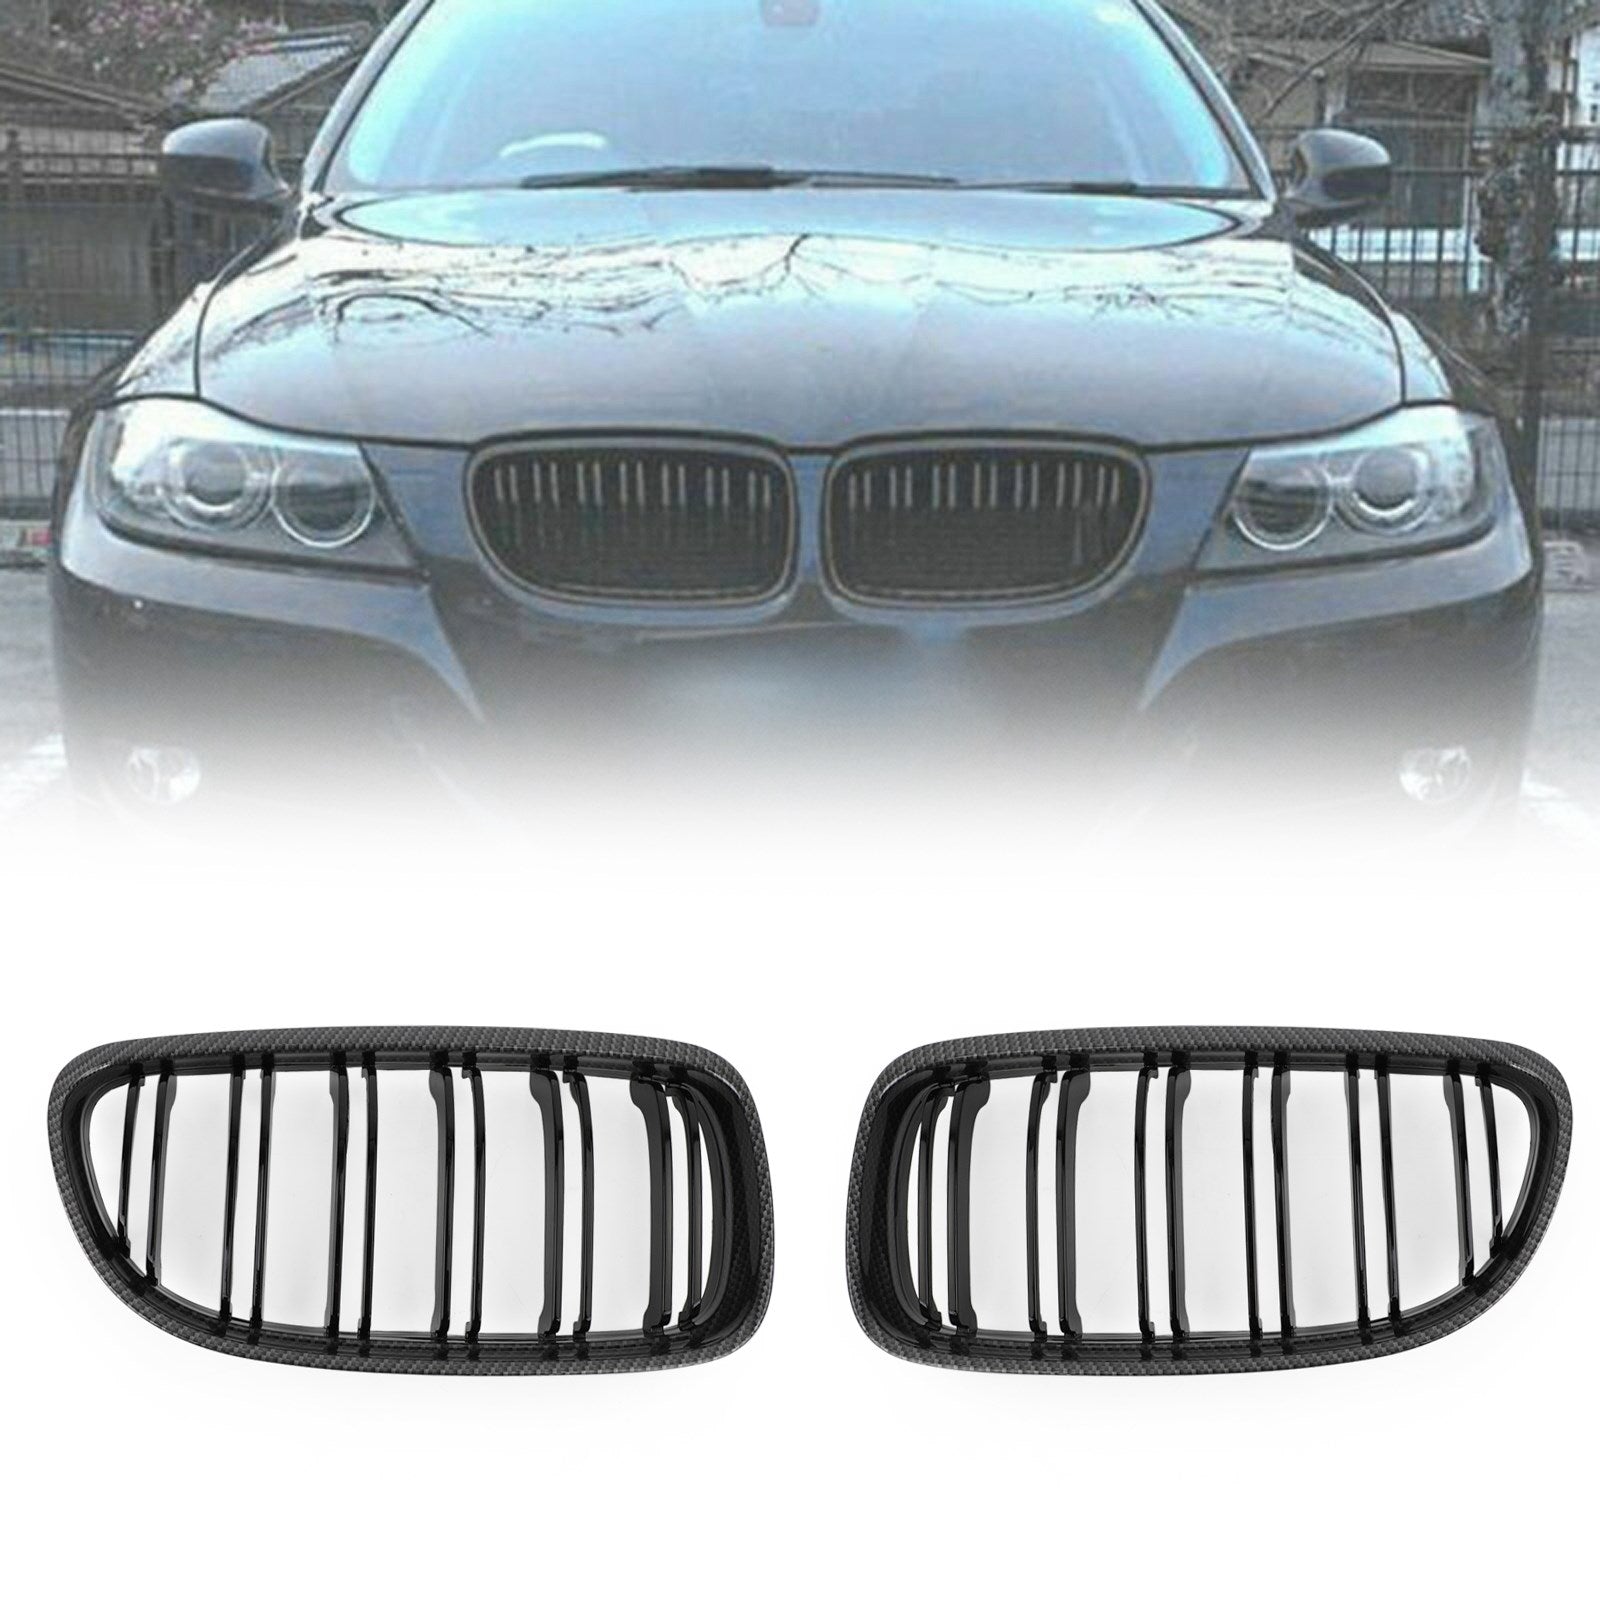 2008-2012 BMW E90/E91 LCI 3 Series Front Kidney Grill Grilles Carbon Fiber 02HGL1106ABK Generic